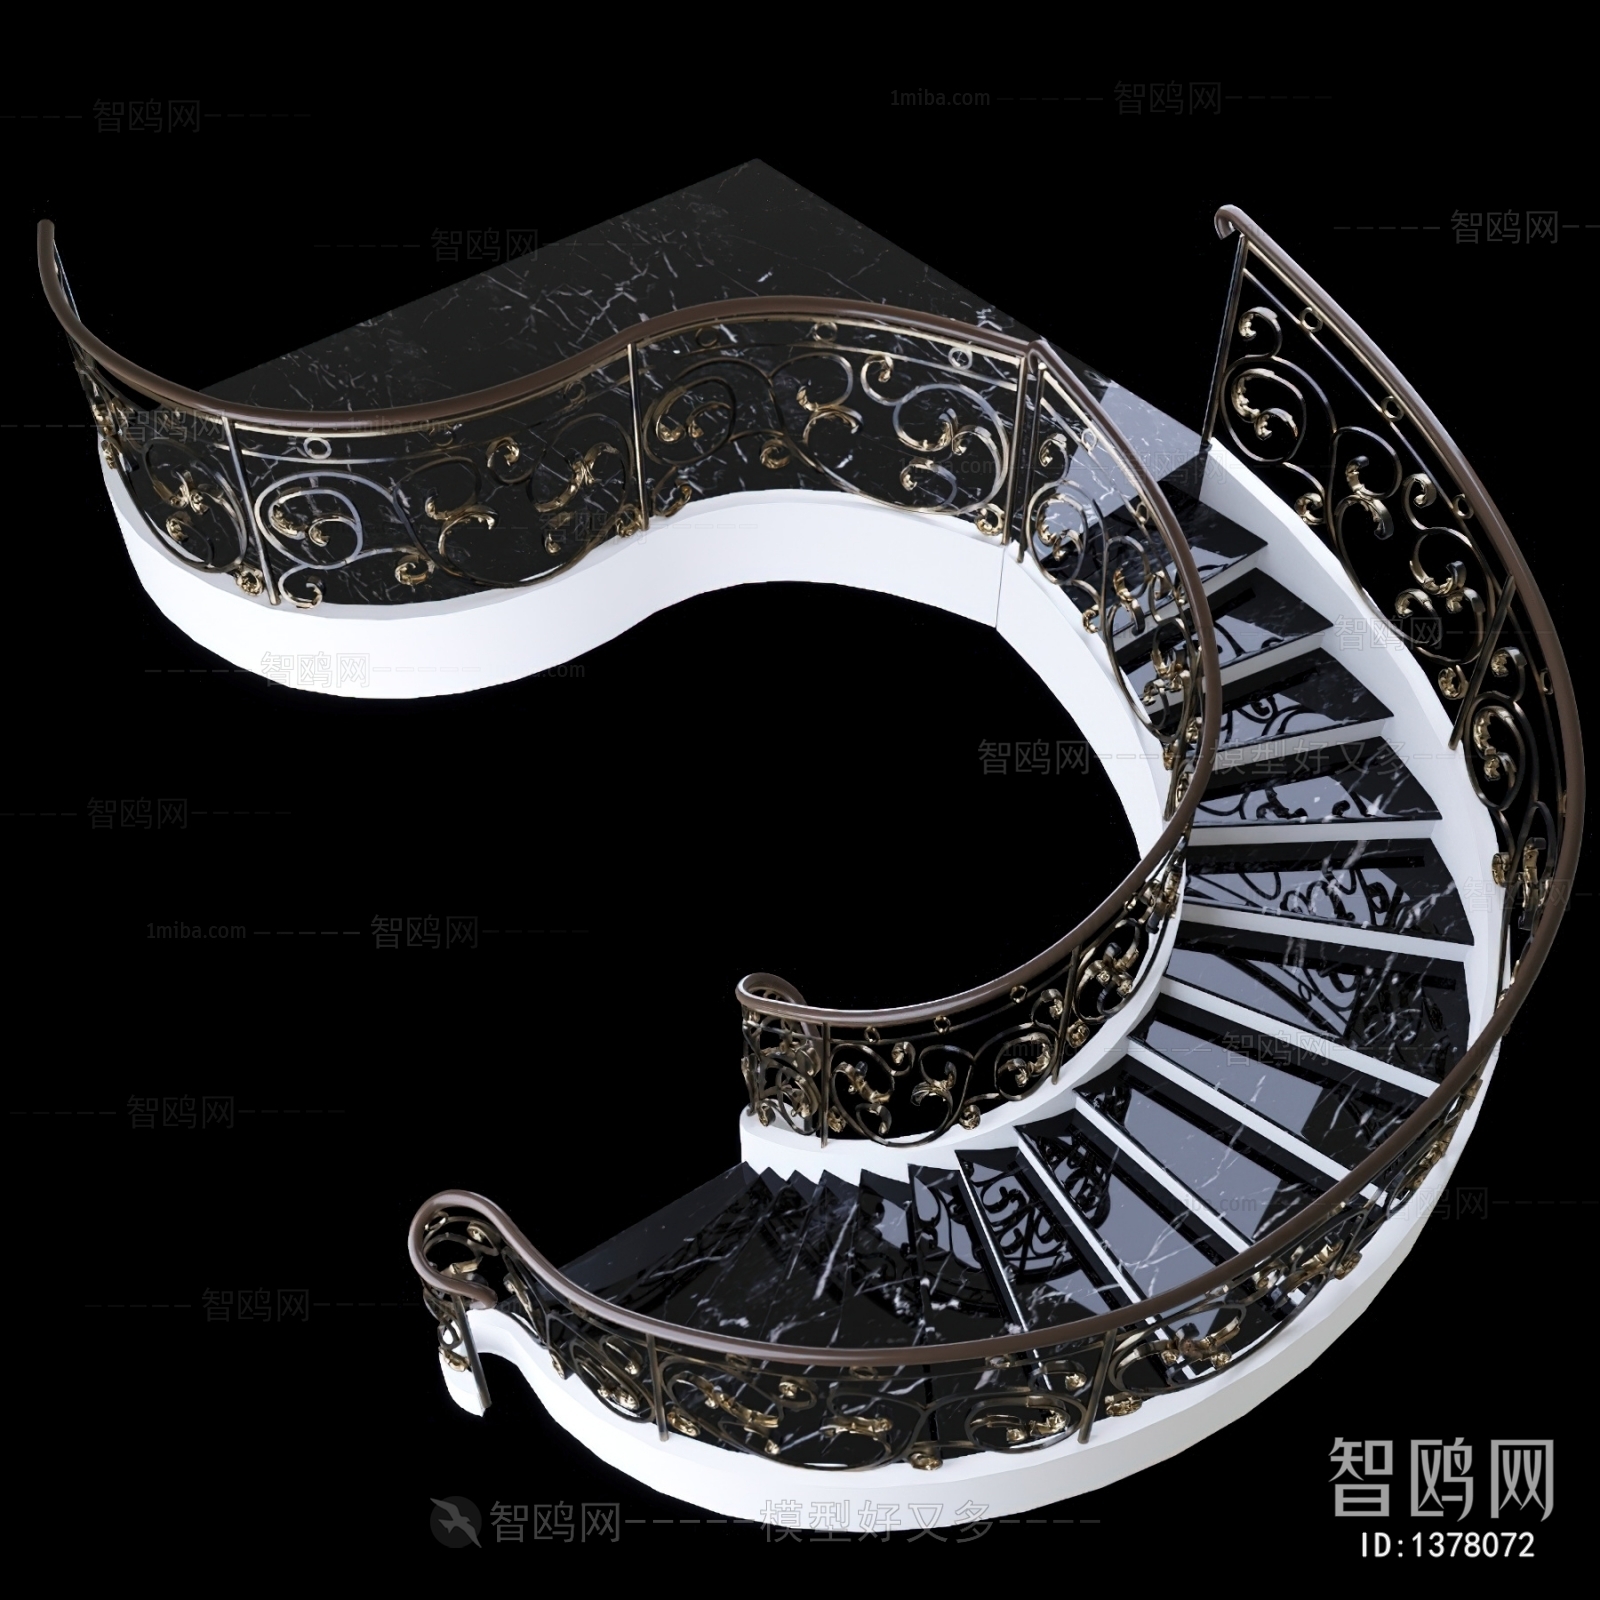 European Style Rotating Staircase